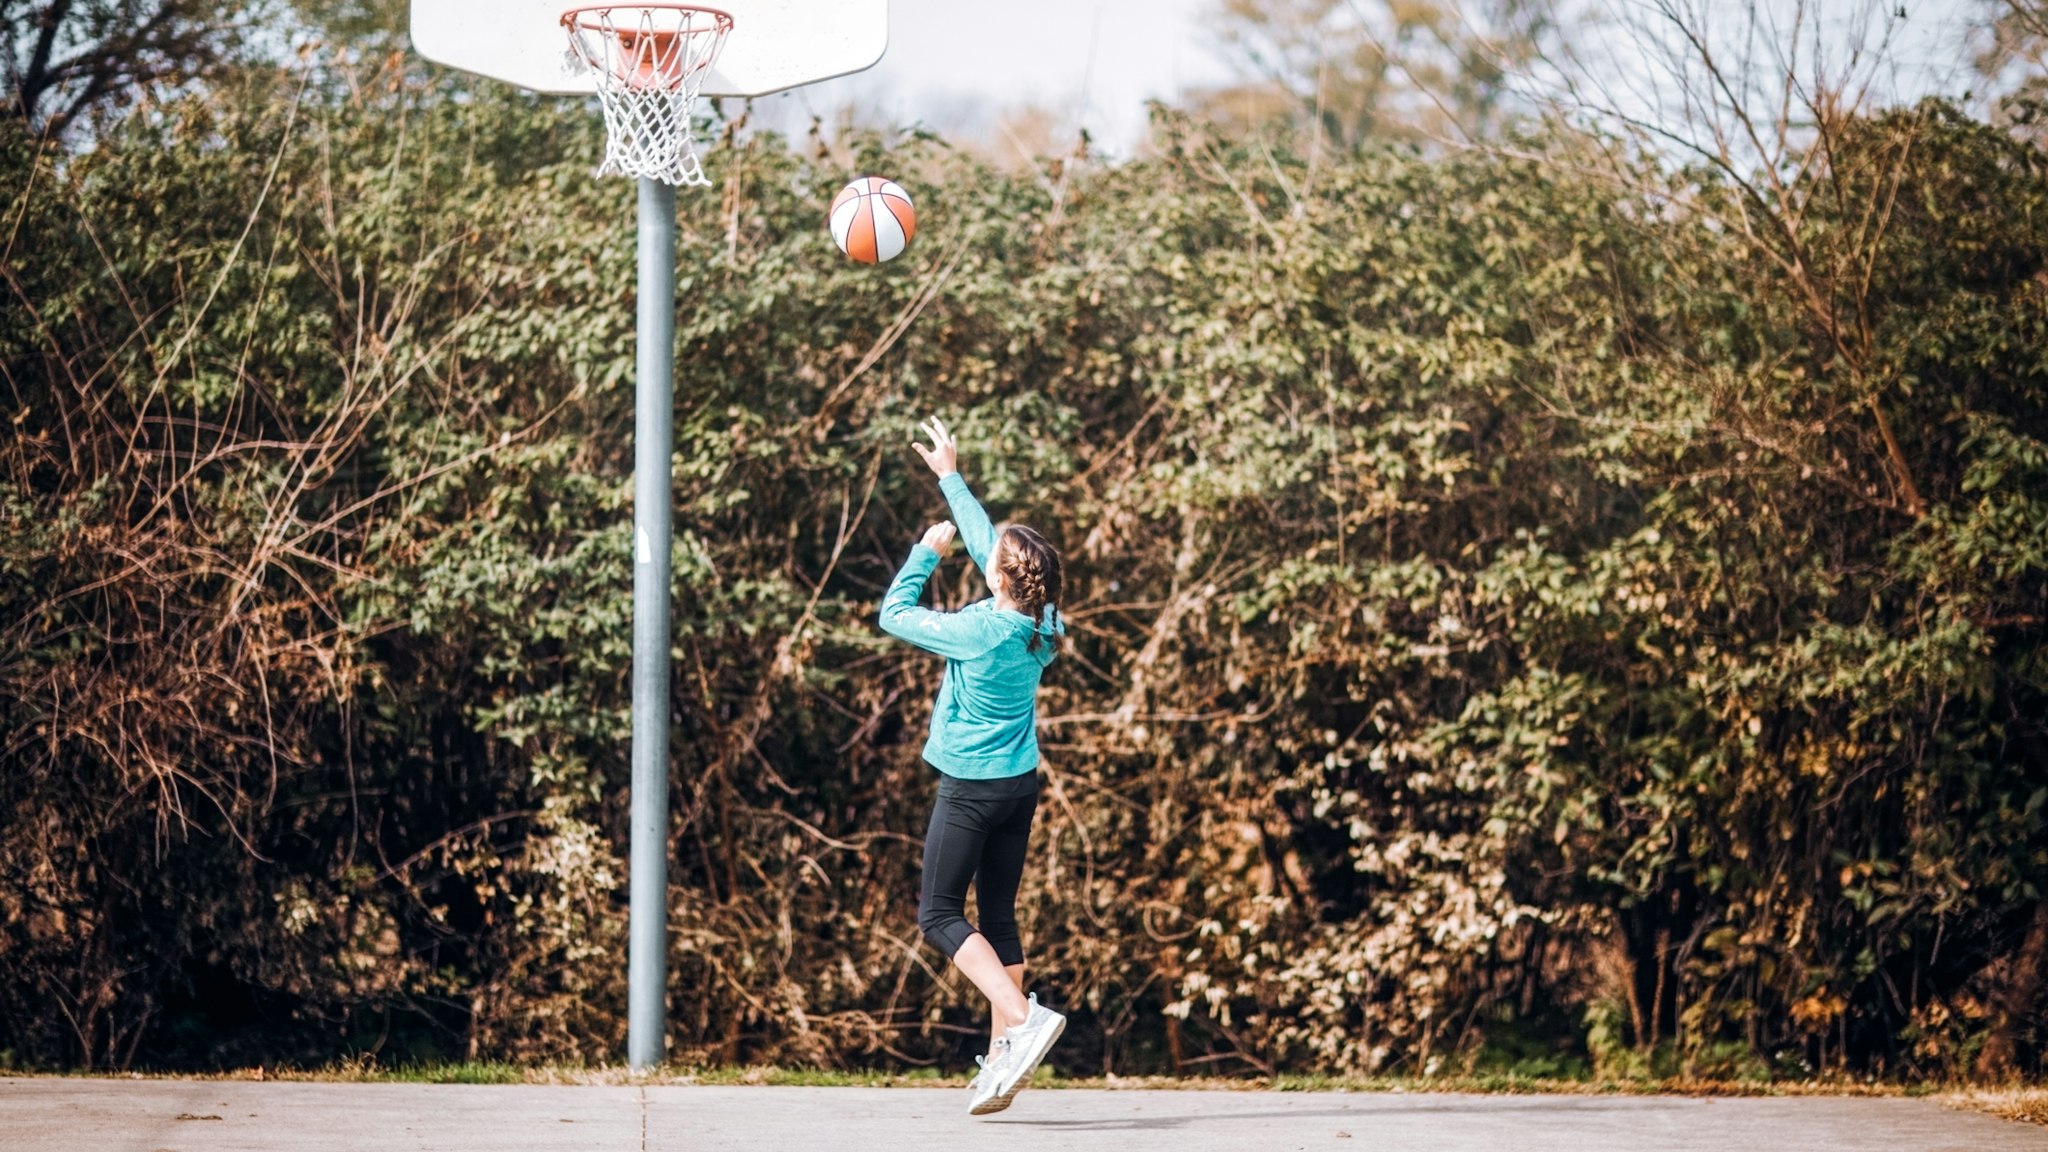 pre-teen girl shooting a layup on outdoor basketball court - stock photo